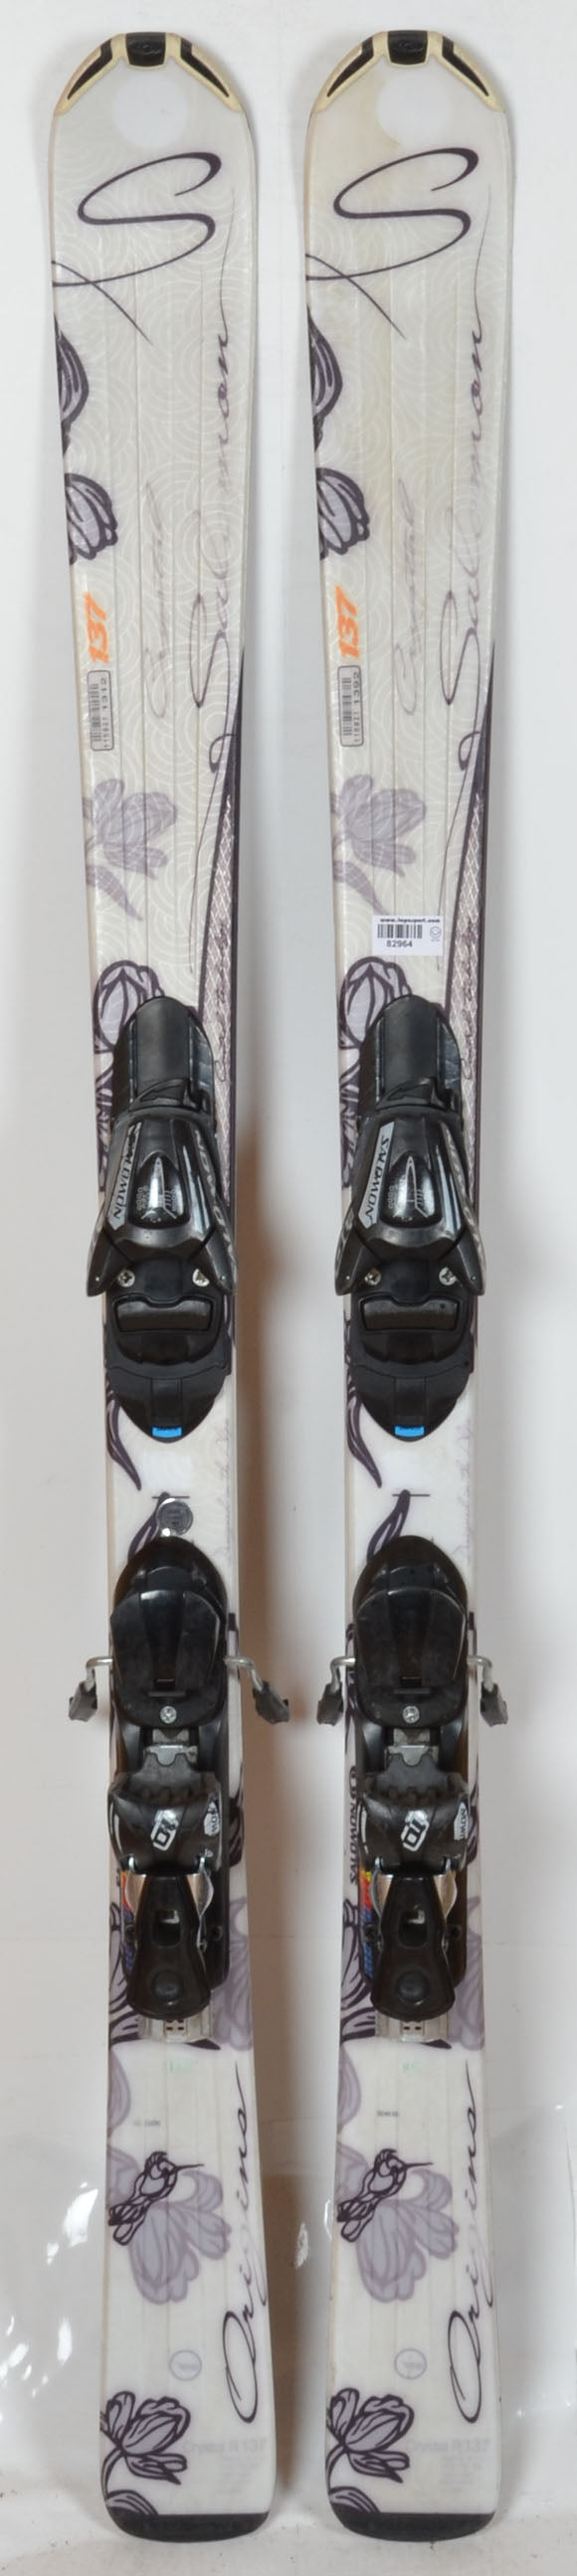 Salomon ORIGINS CRYSTAL - skis Femme d'occasion